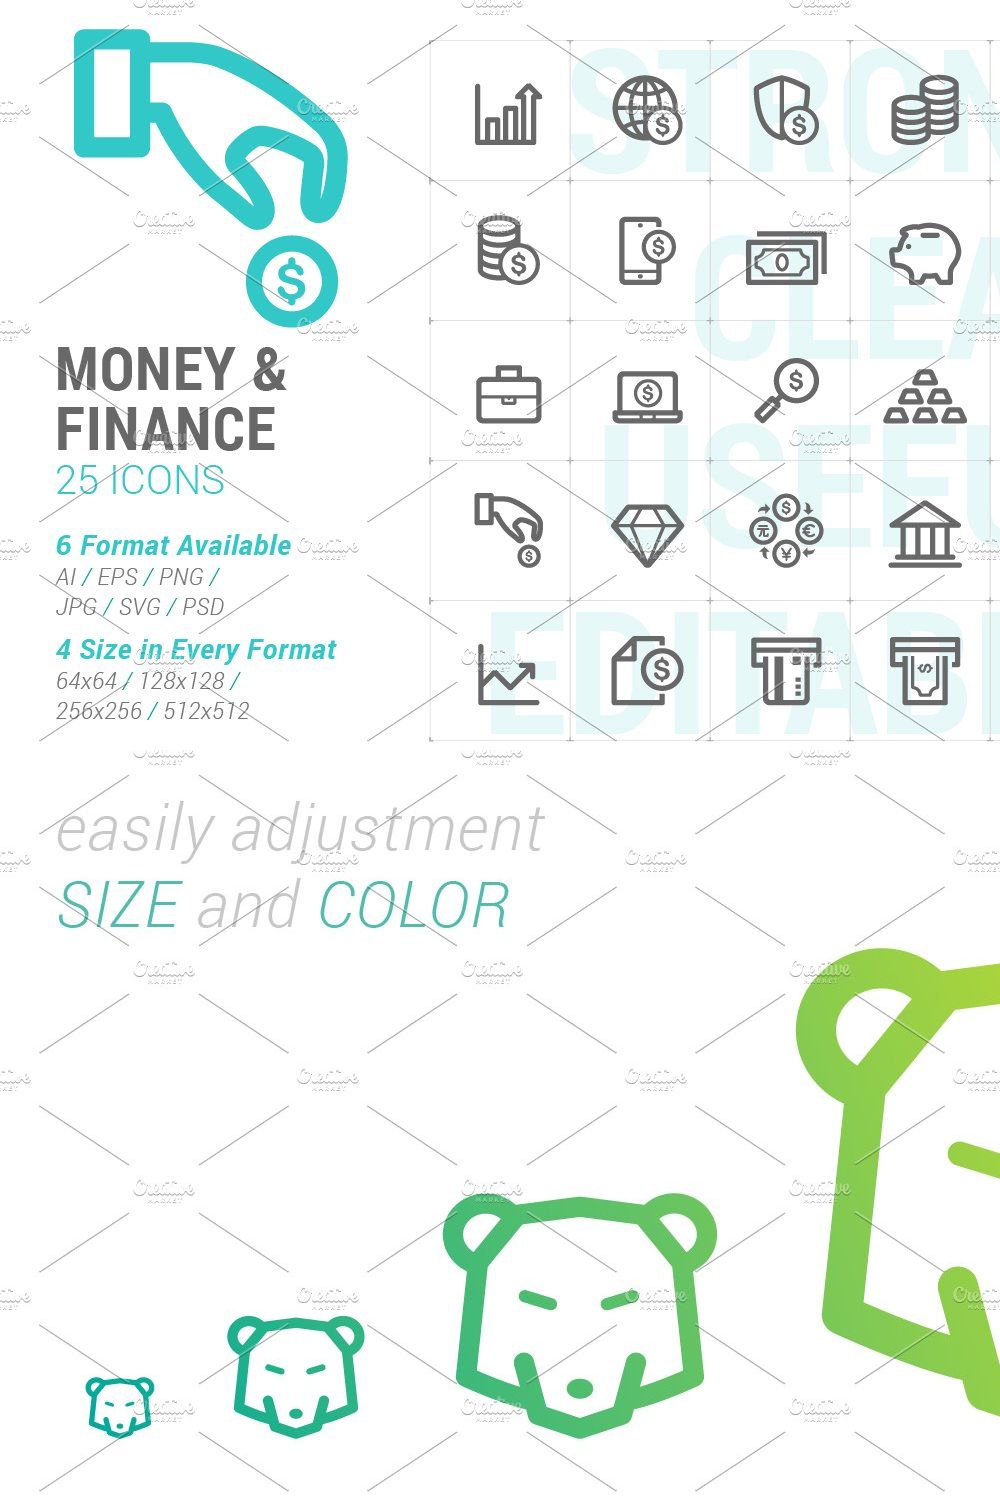 Money & Finance Mini Icon pinterest preview image.